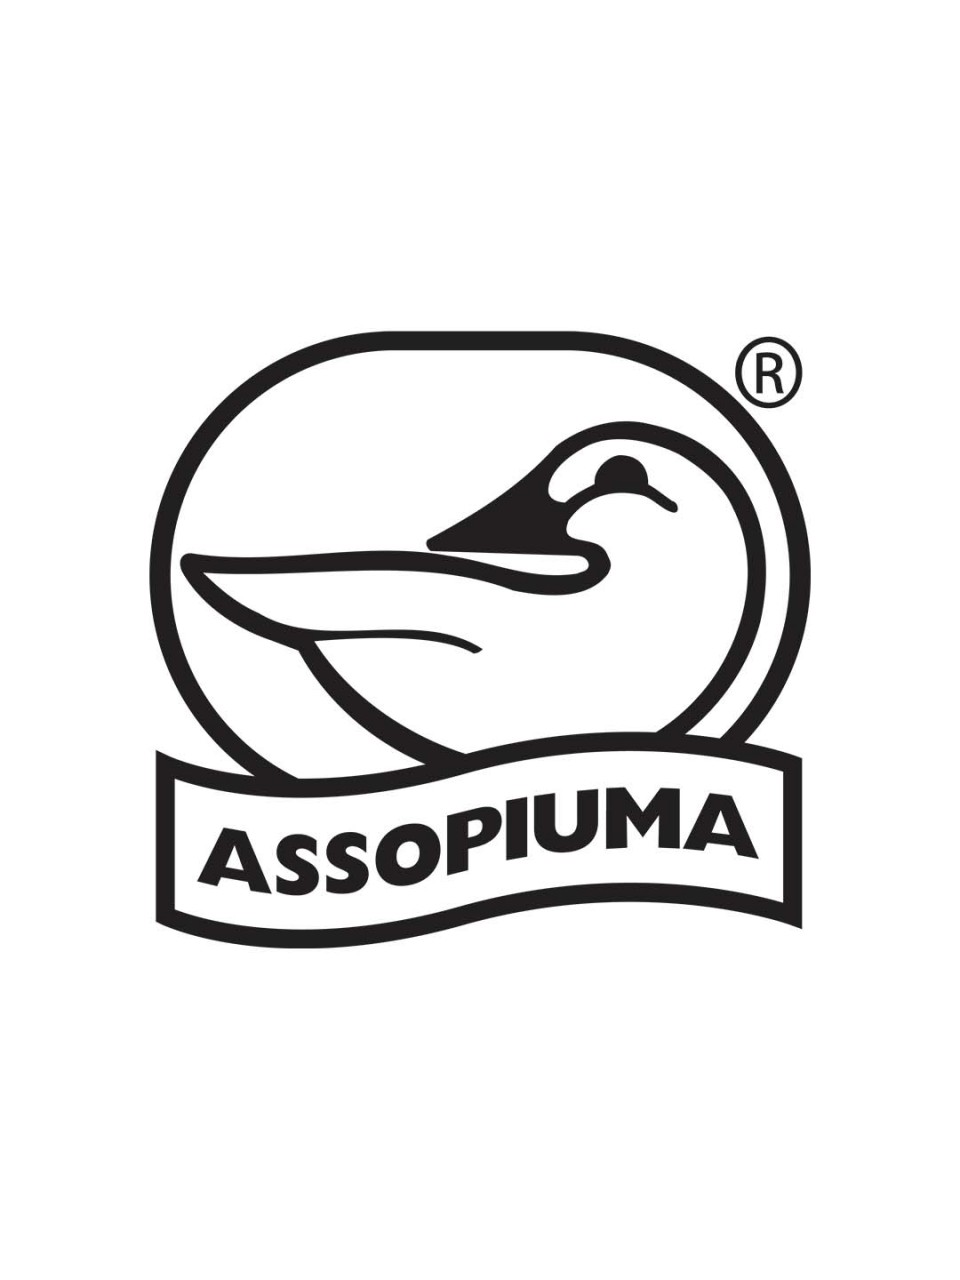 Assopiuma